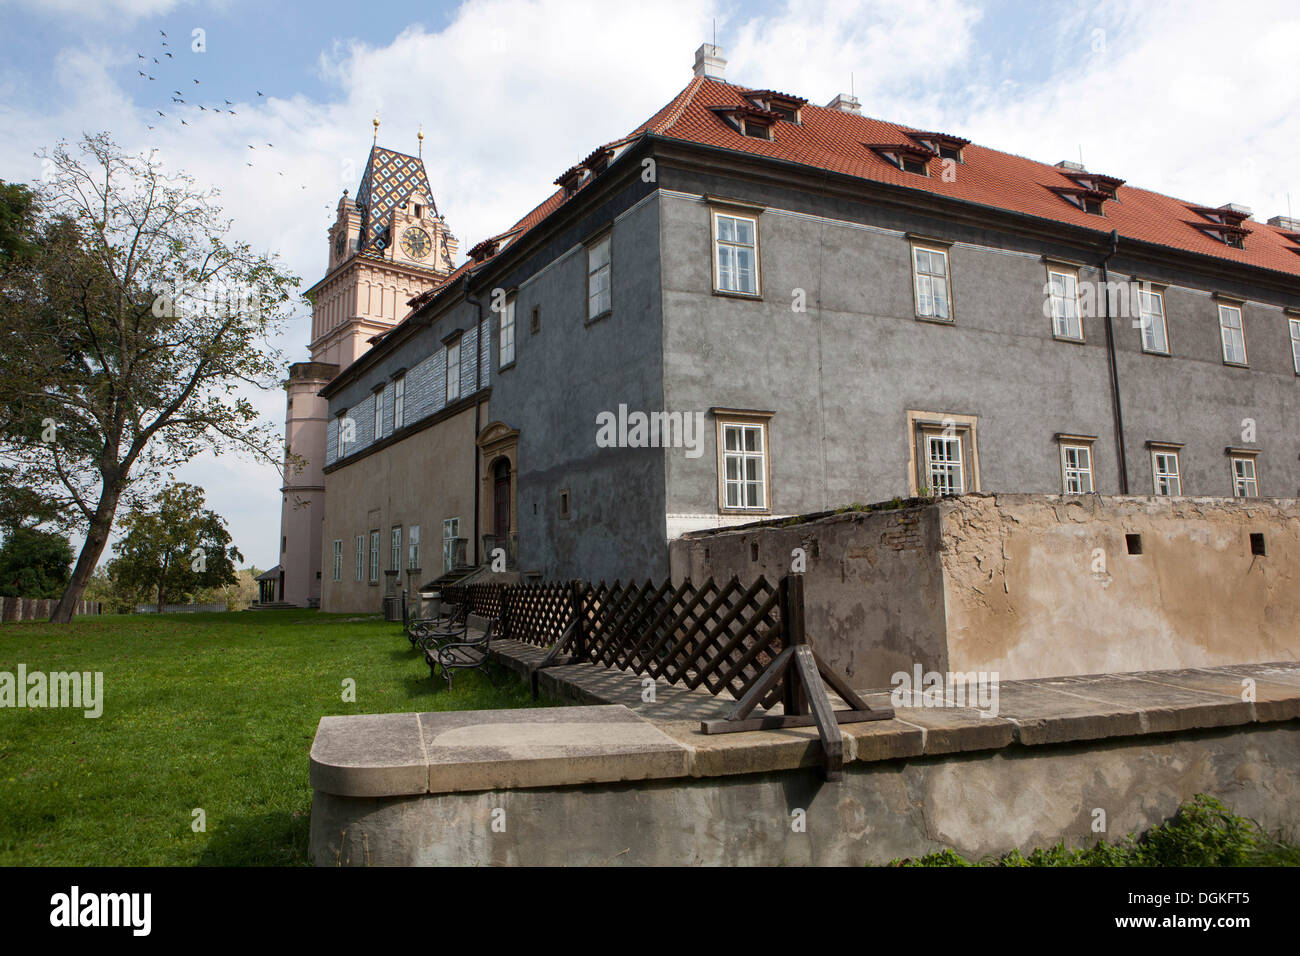 Castle in Brandys nad Labem Czech Republic Stock Photo